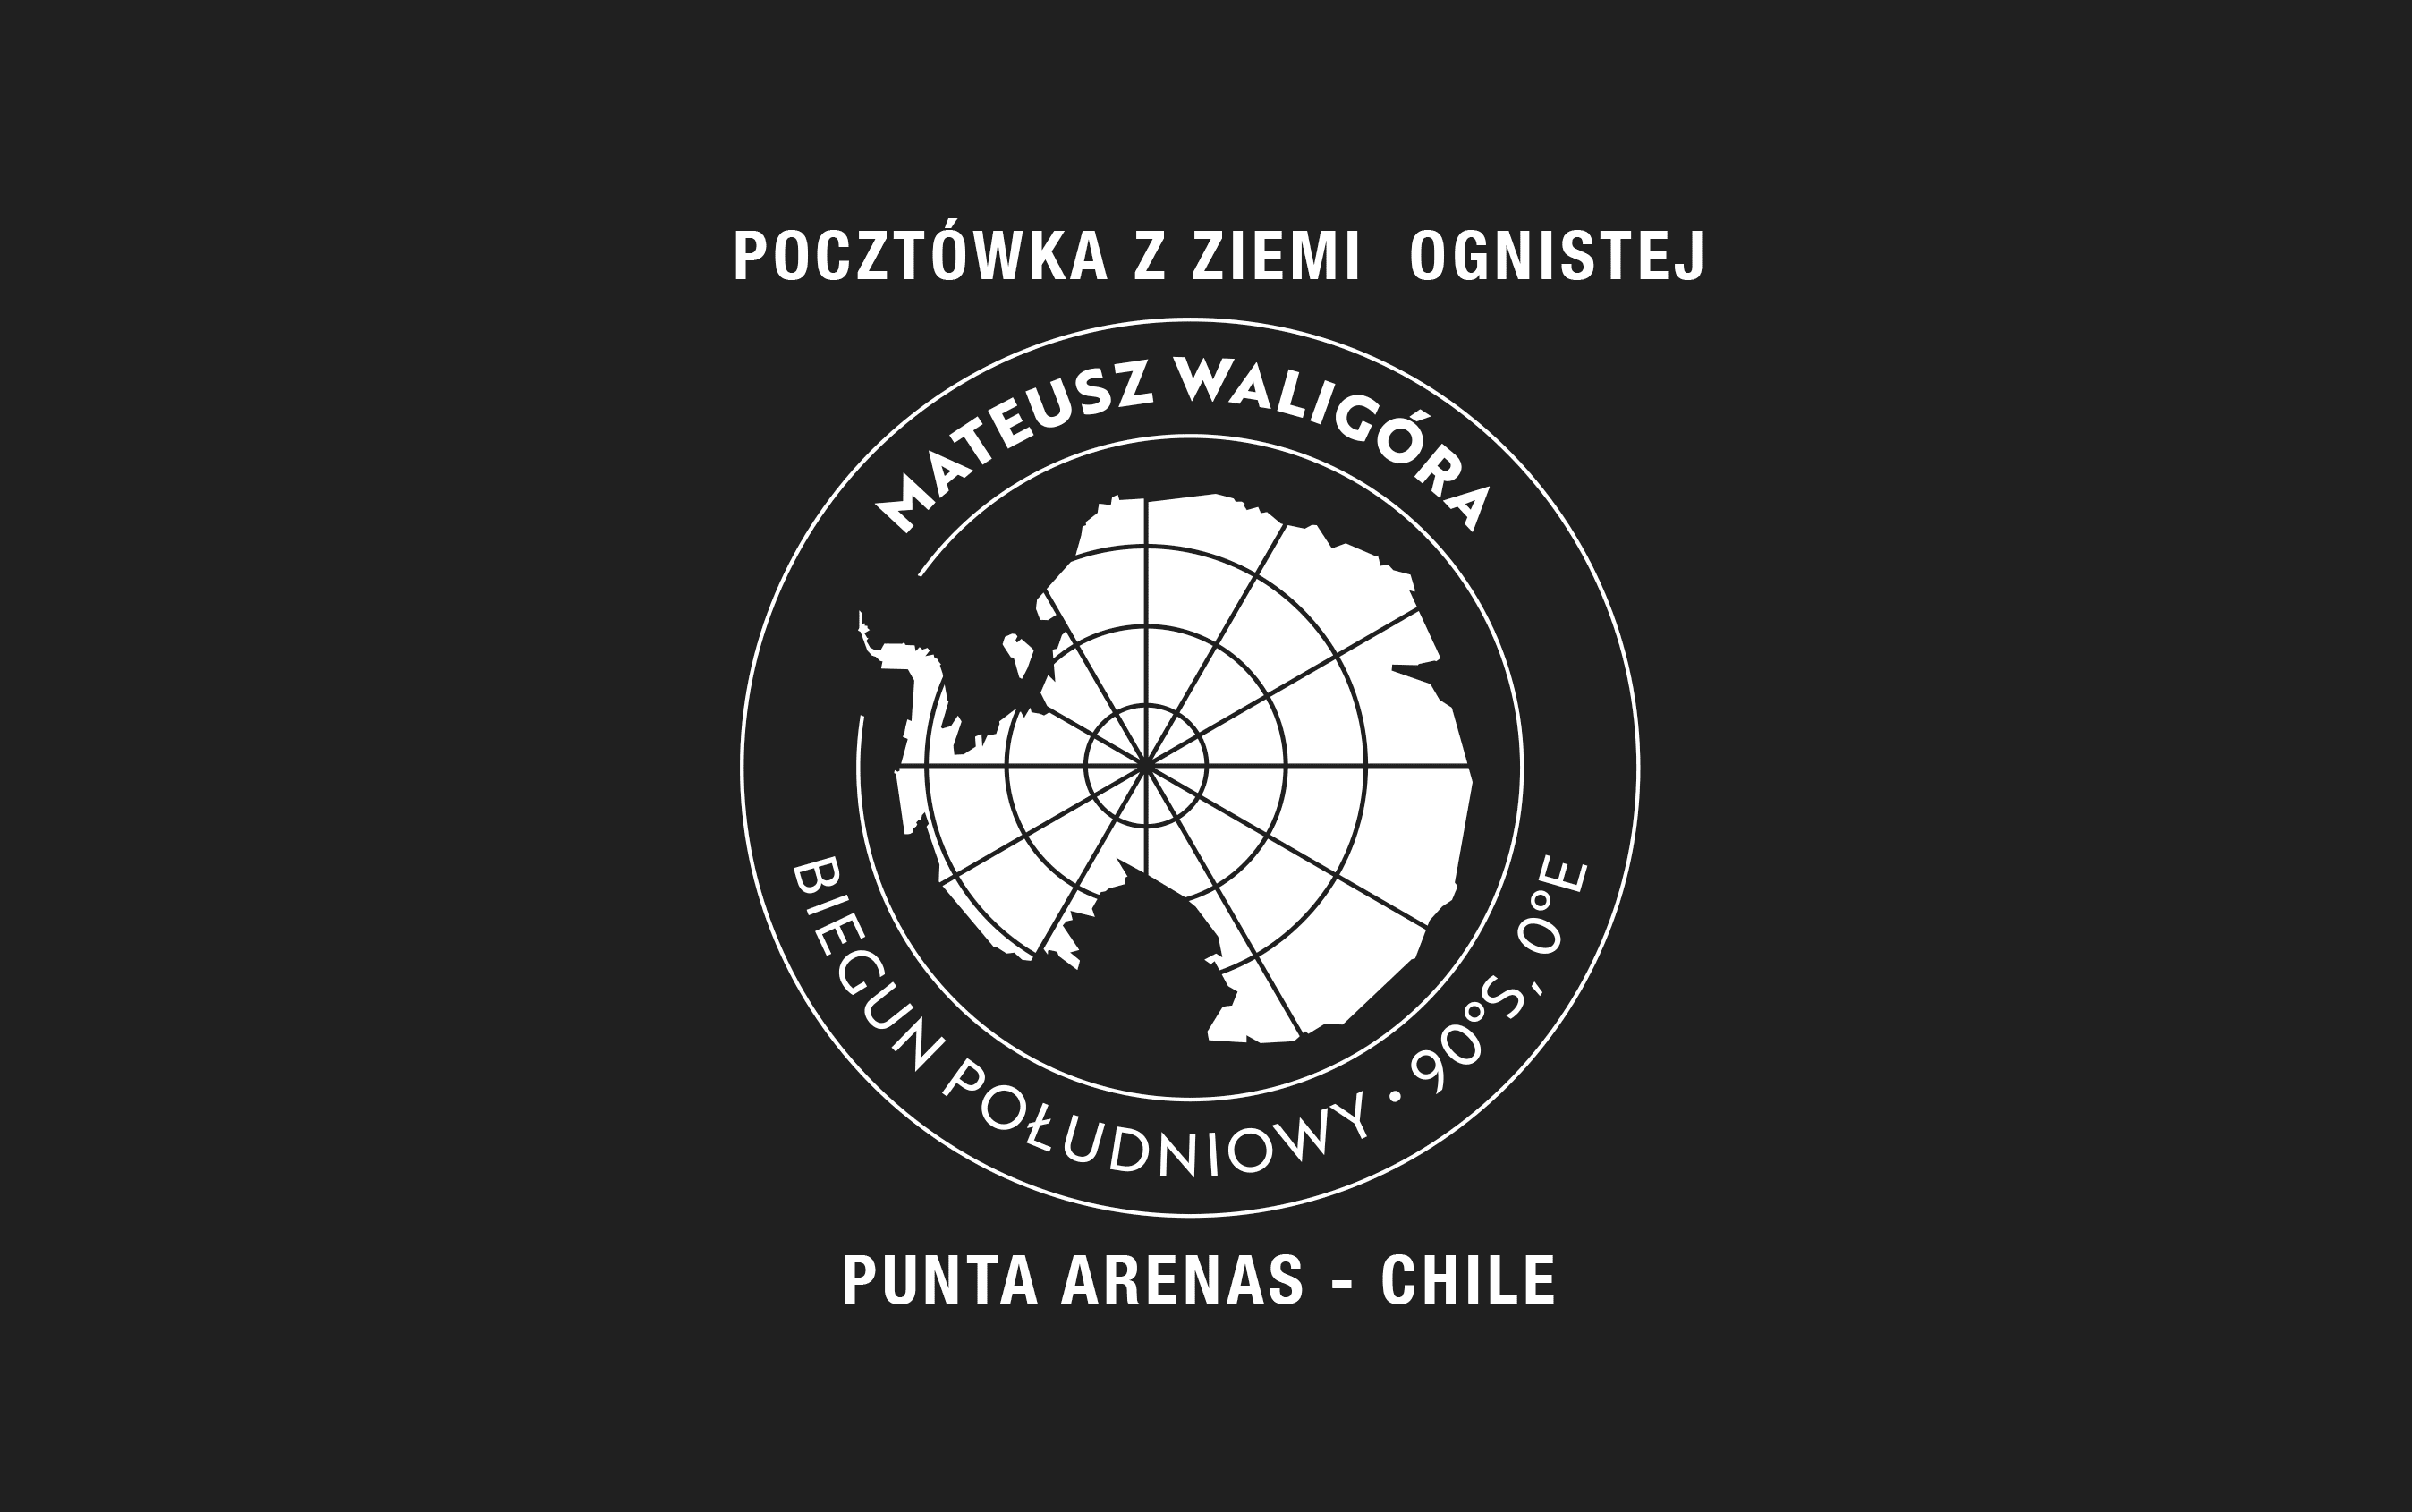 POCZTÓWKA Z KOŃCA ŚWIATA - Punta Arenas CHILE